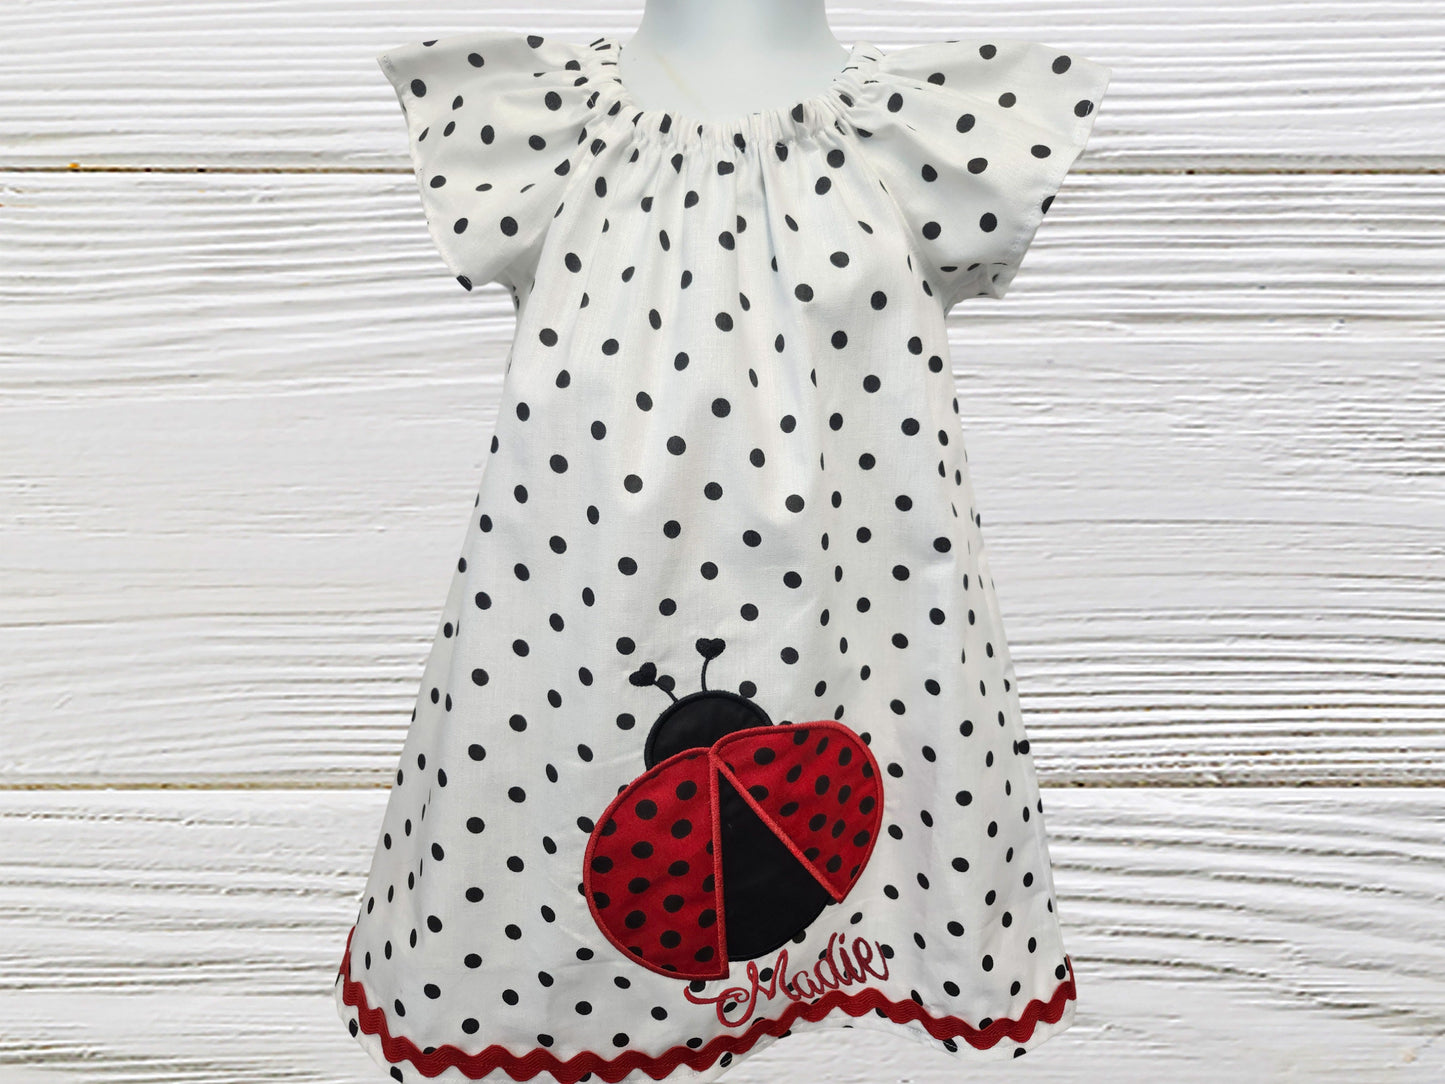 Ladybug dress embroidered applique